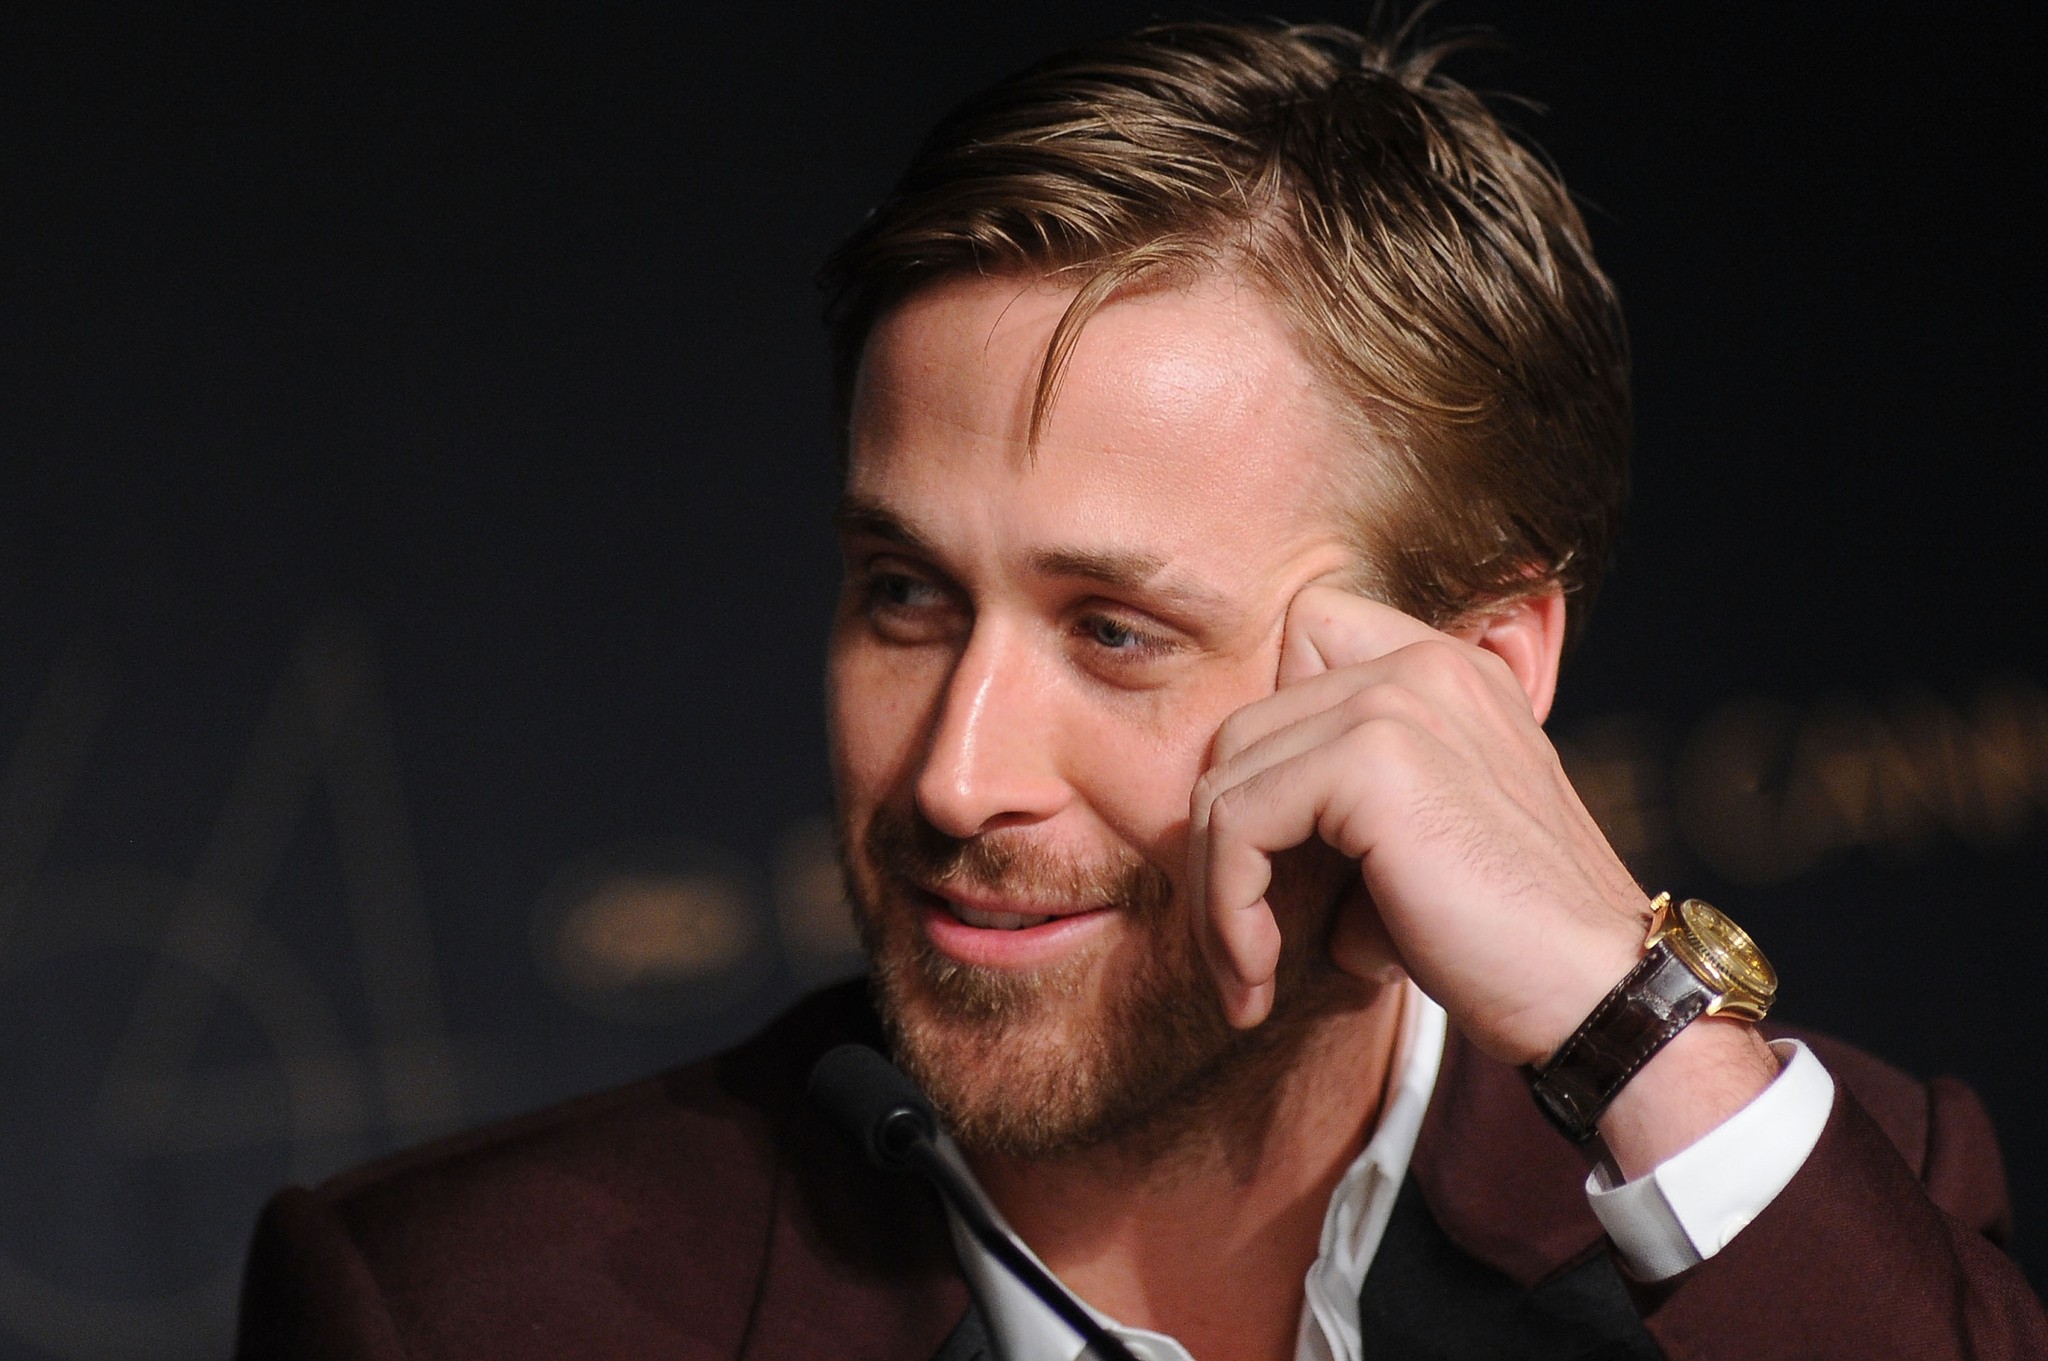 People 2048x1361 Ryan Gosling men looking away actor beard wristwatch